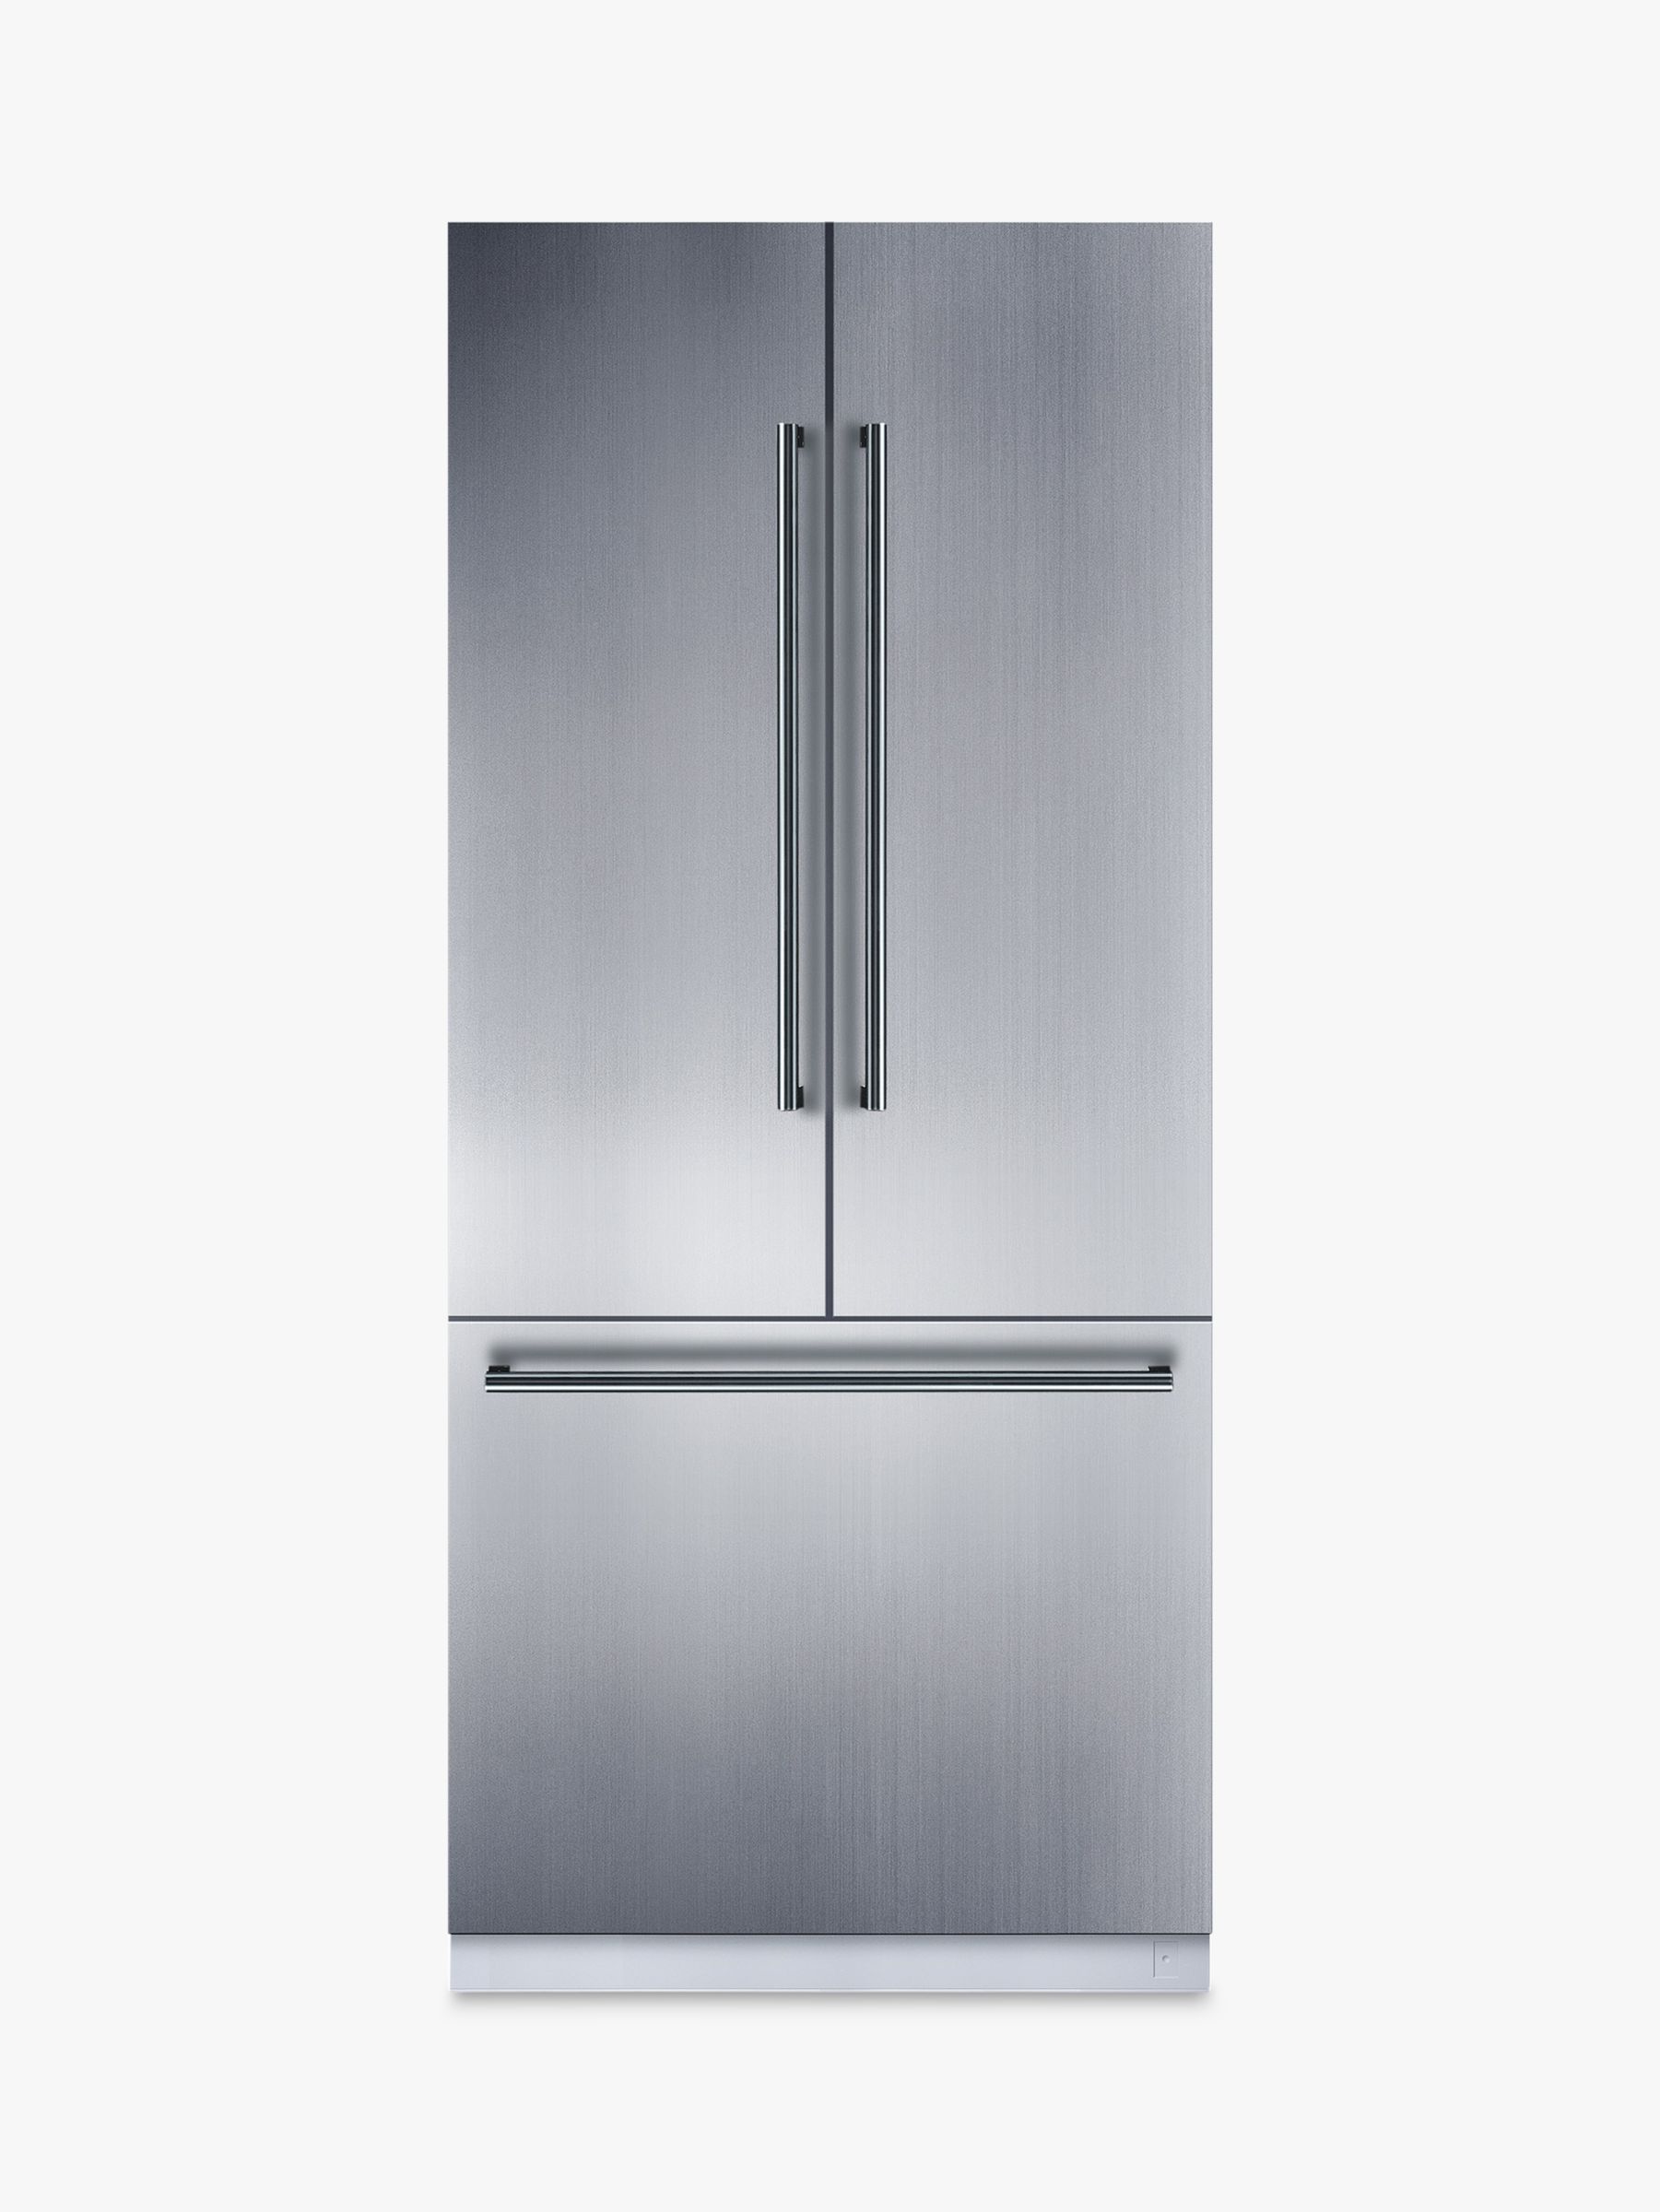 Siemens CI36BP01 Integrated Fridge Freezer, A+ Energy Rating, 91cm Wide, Stainless Steel